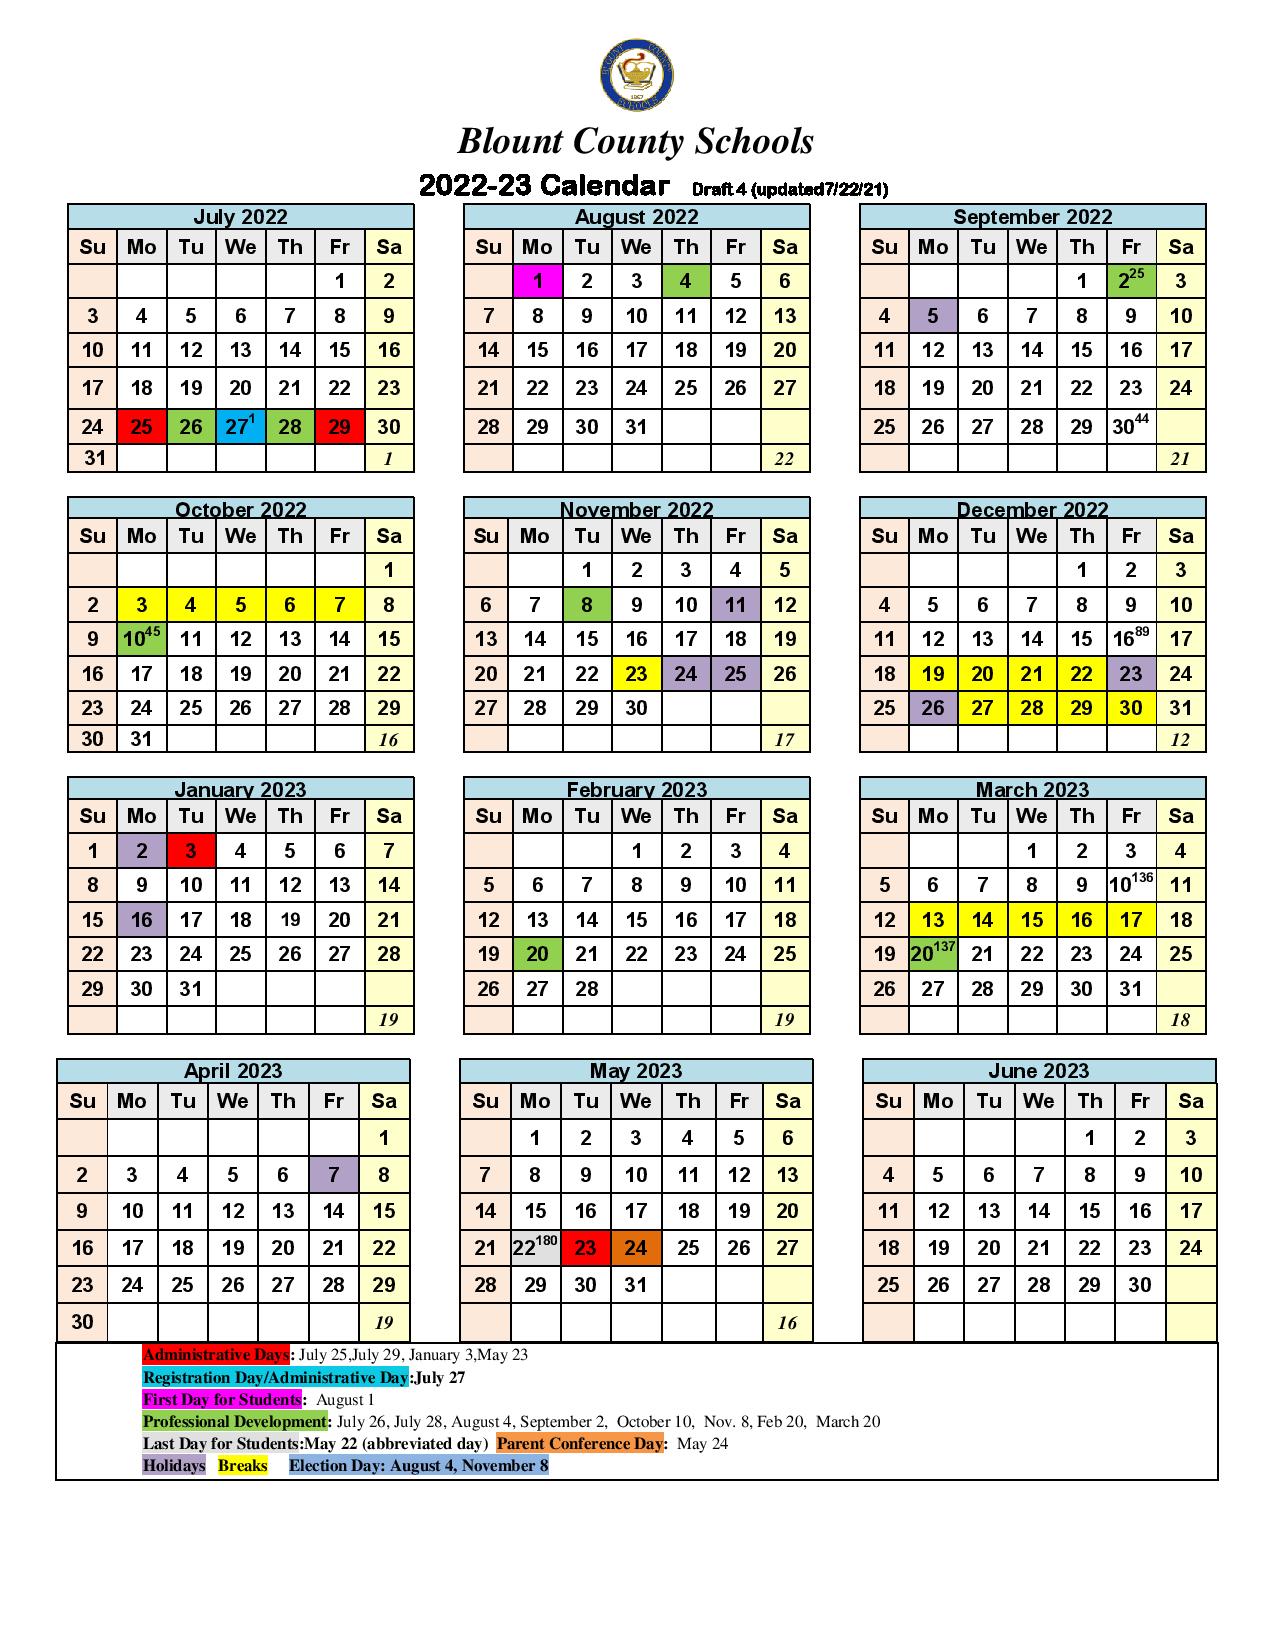 Blount County Schools Calendar 20222023 in PDF Format